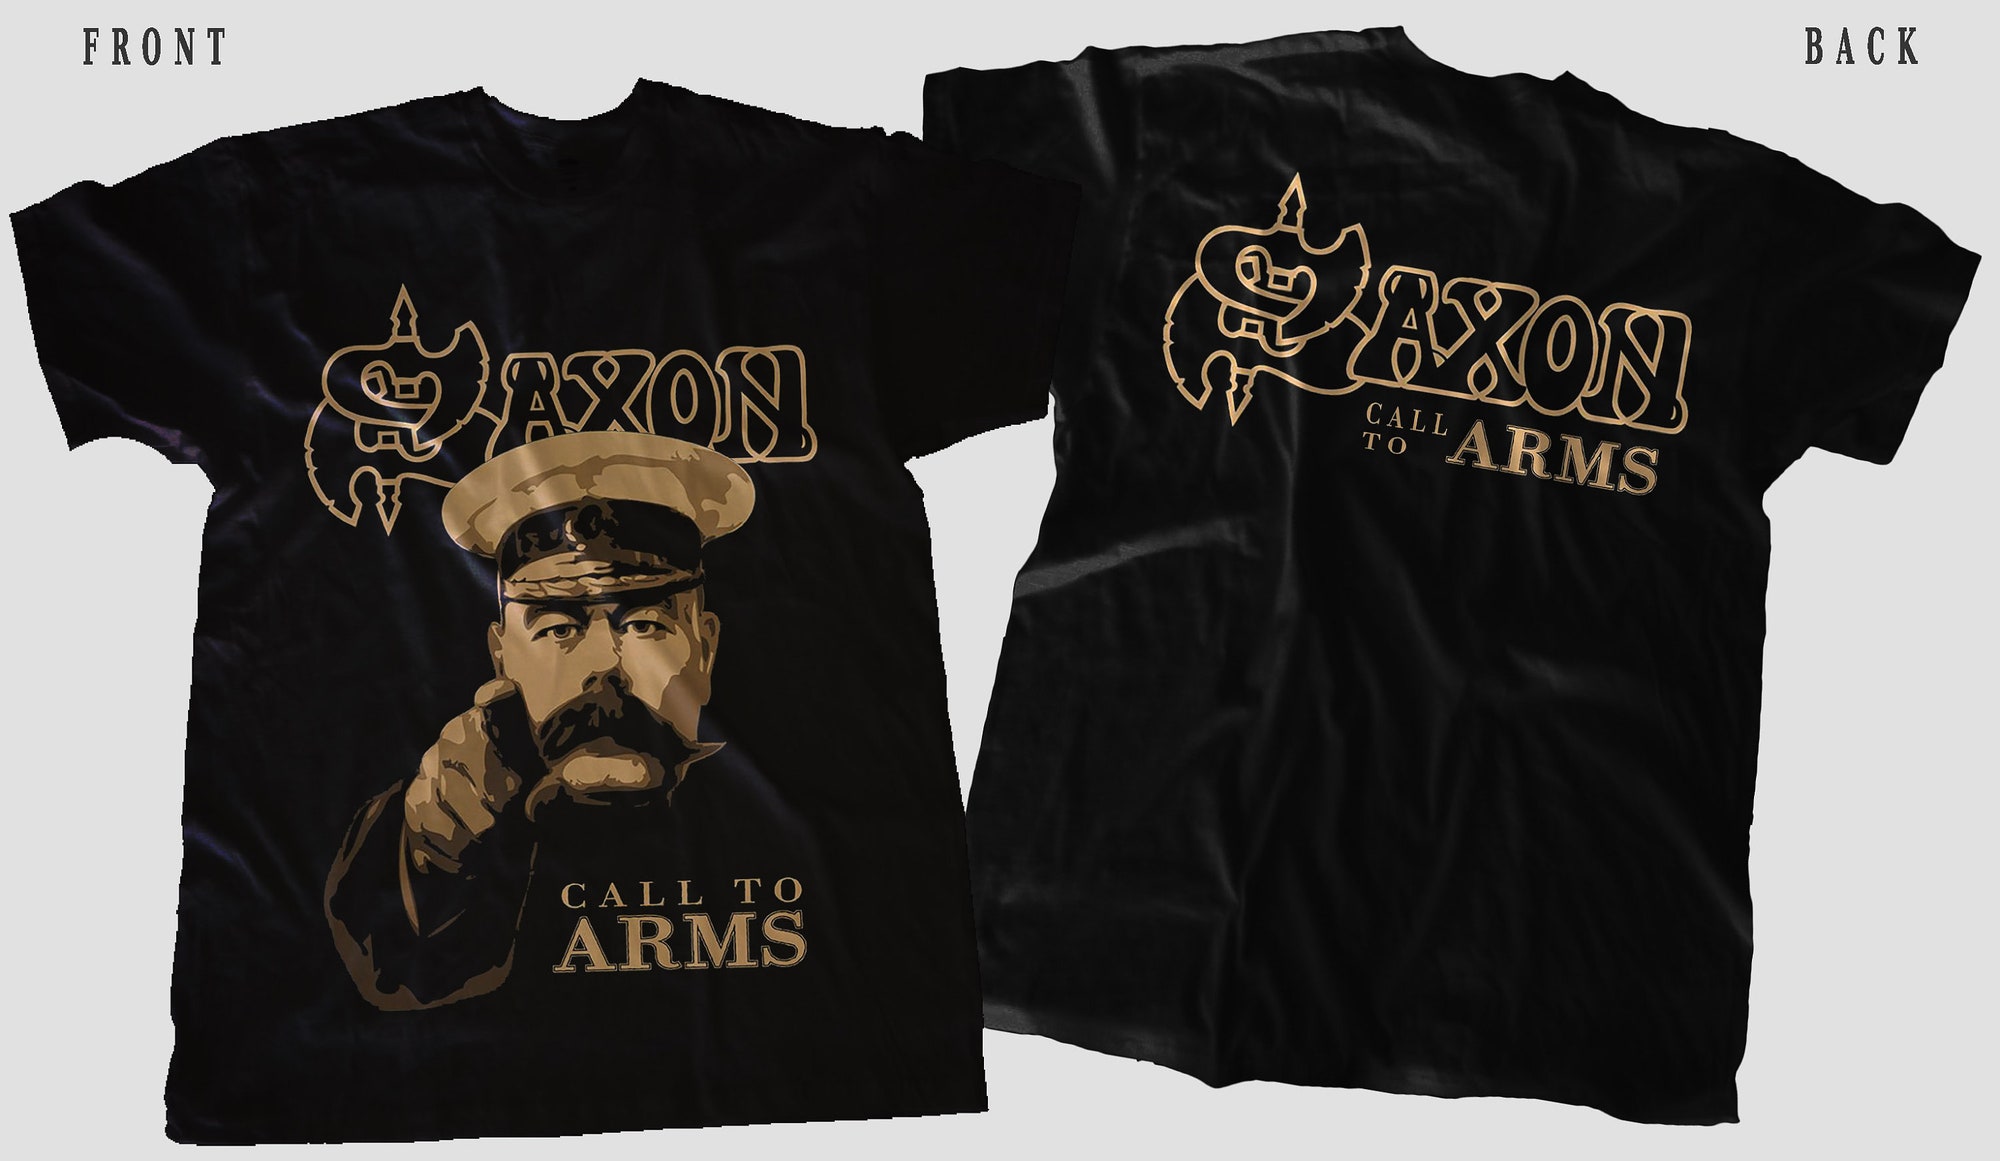 SAXON - Call To Arms T-shirt